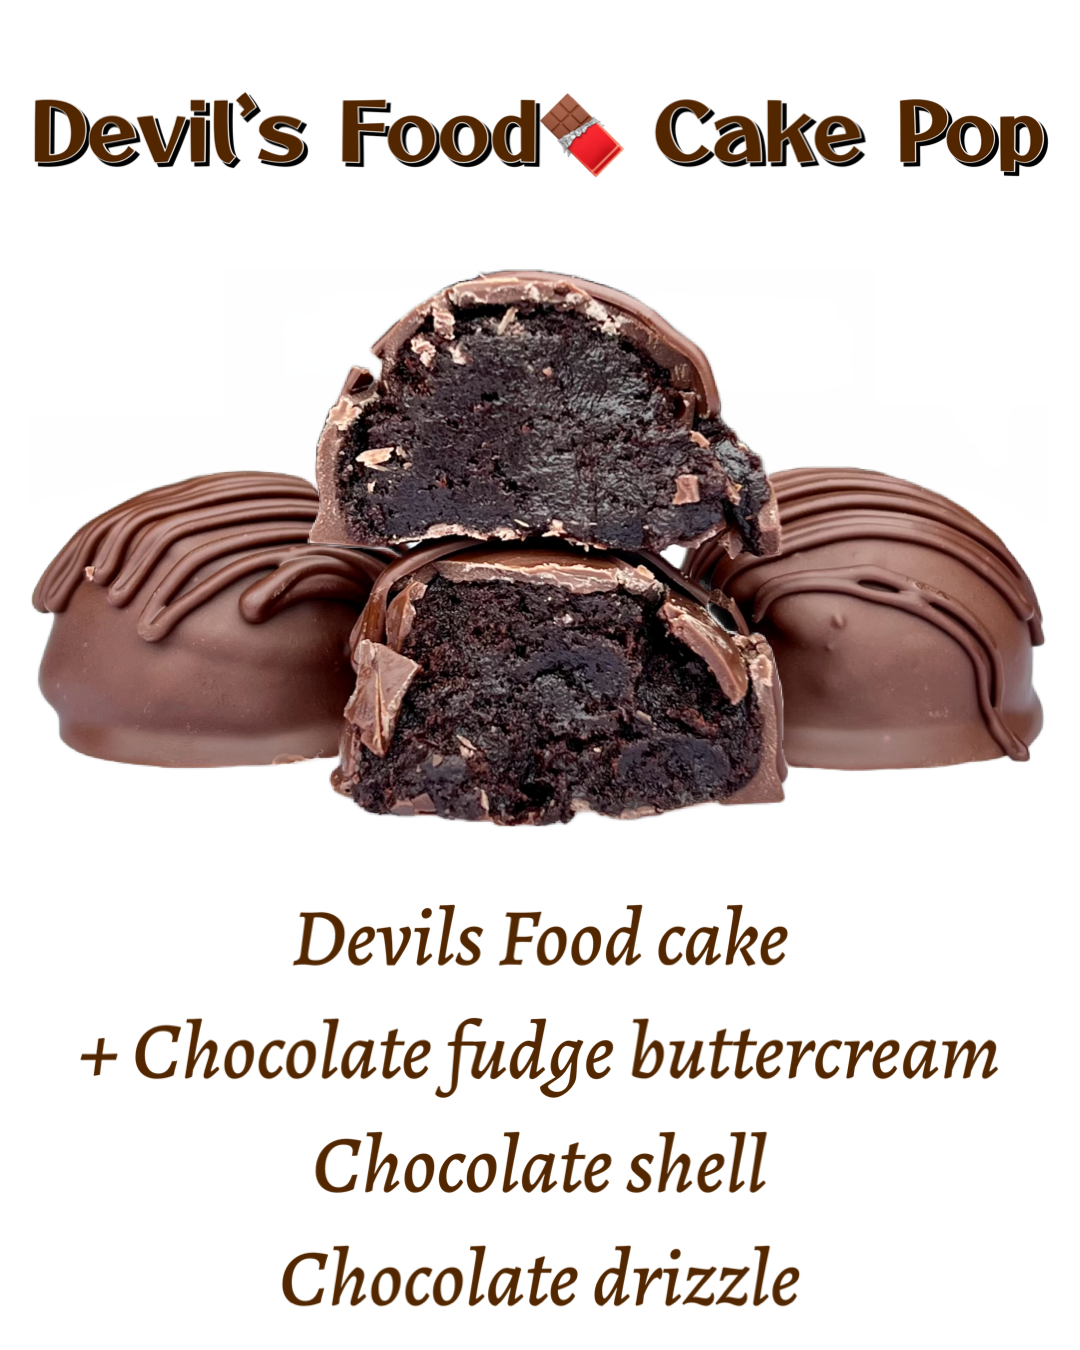 Devil's Food cake pop